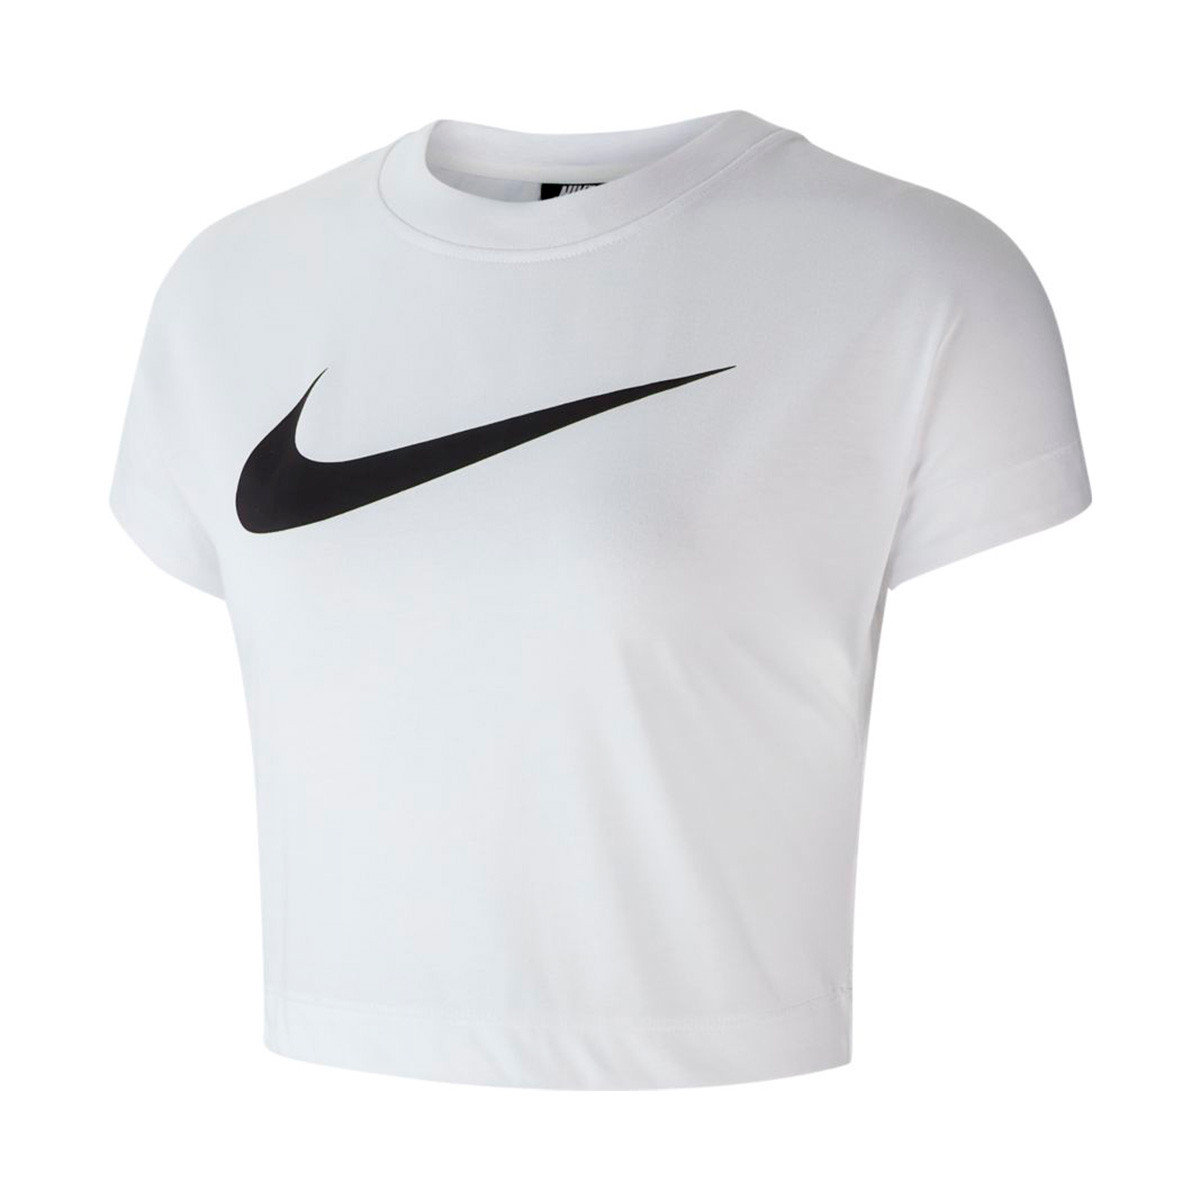 Jersey Nike Sportswear NSW Mujer White-Black - Football store Fútbol Emotion